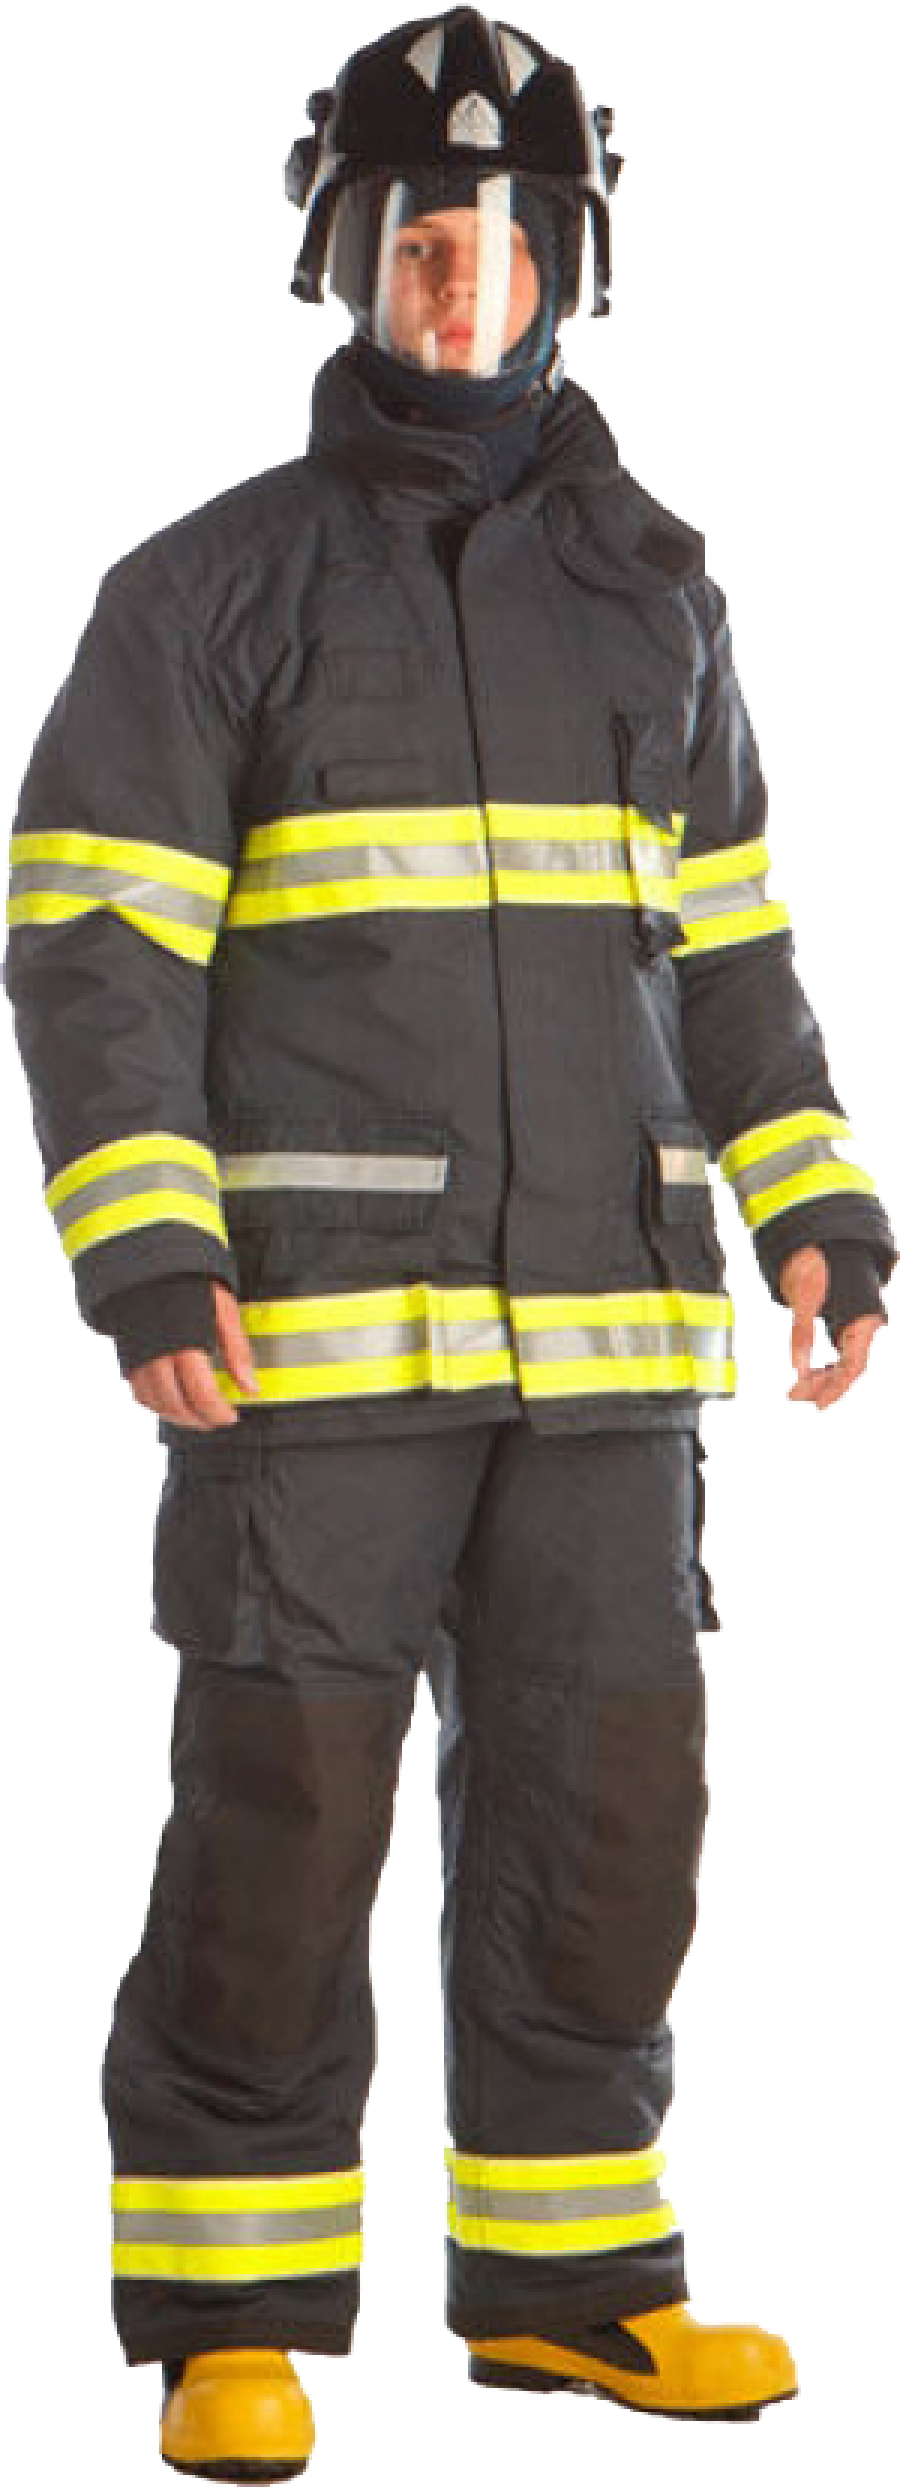 Image - Fireman Uniform.png |